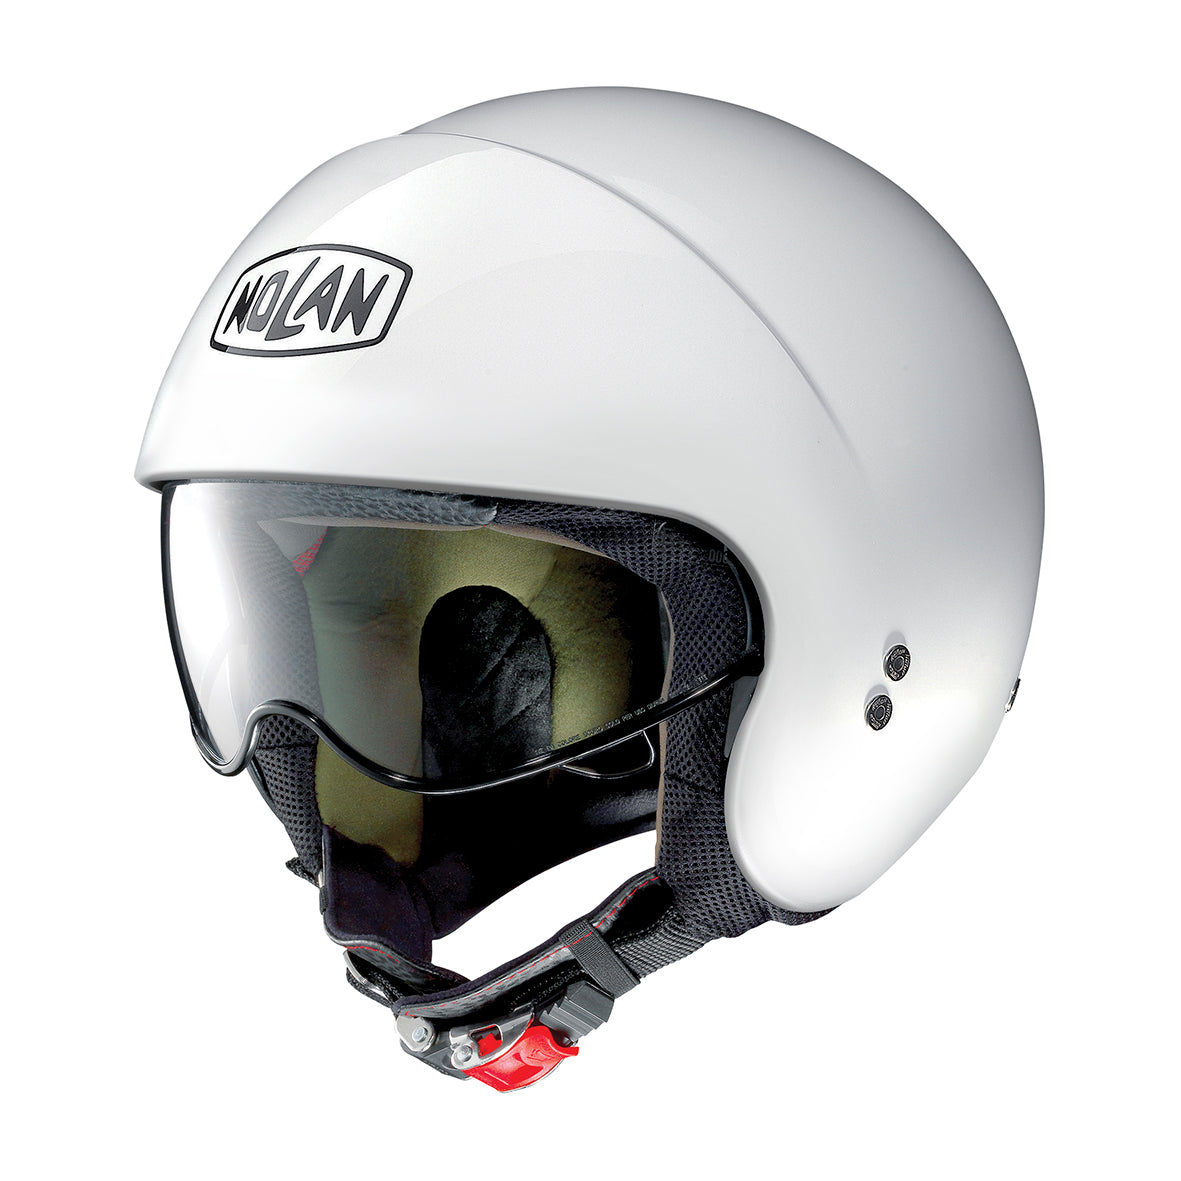 Nolan N21 Special 89 Pure White Helmet